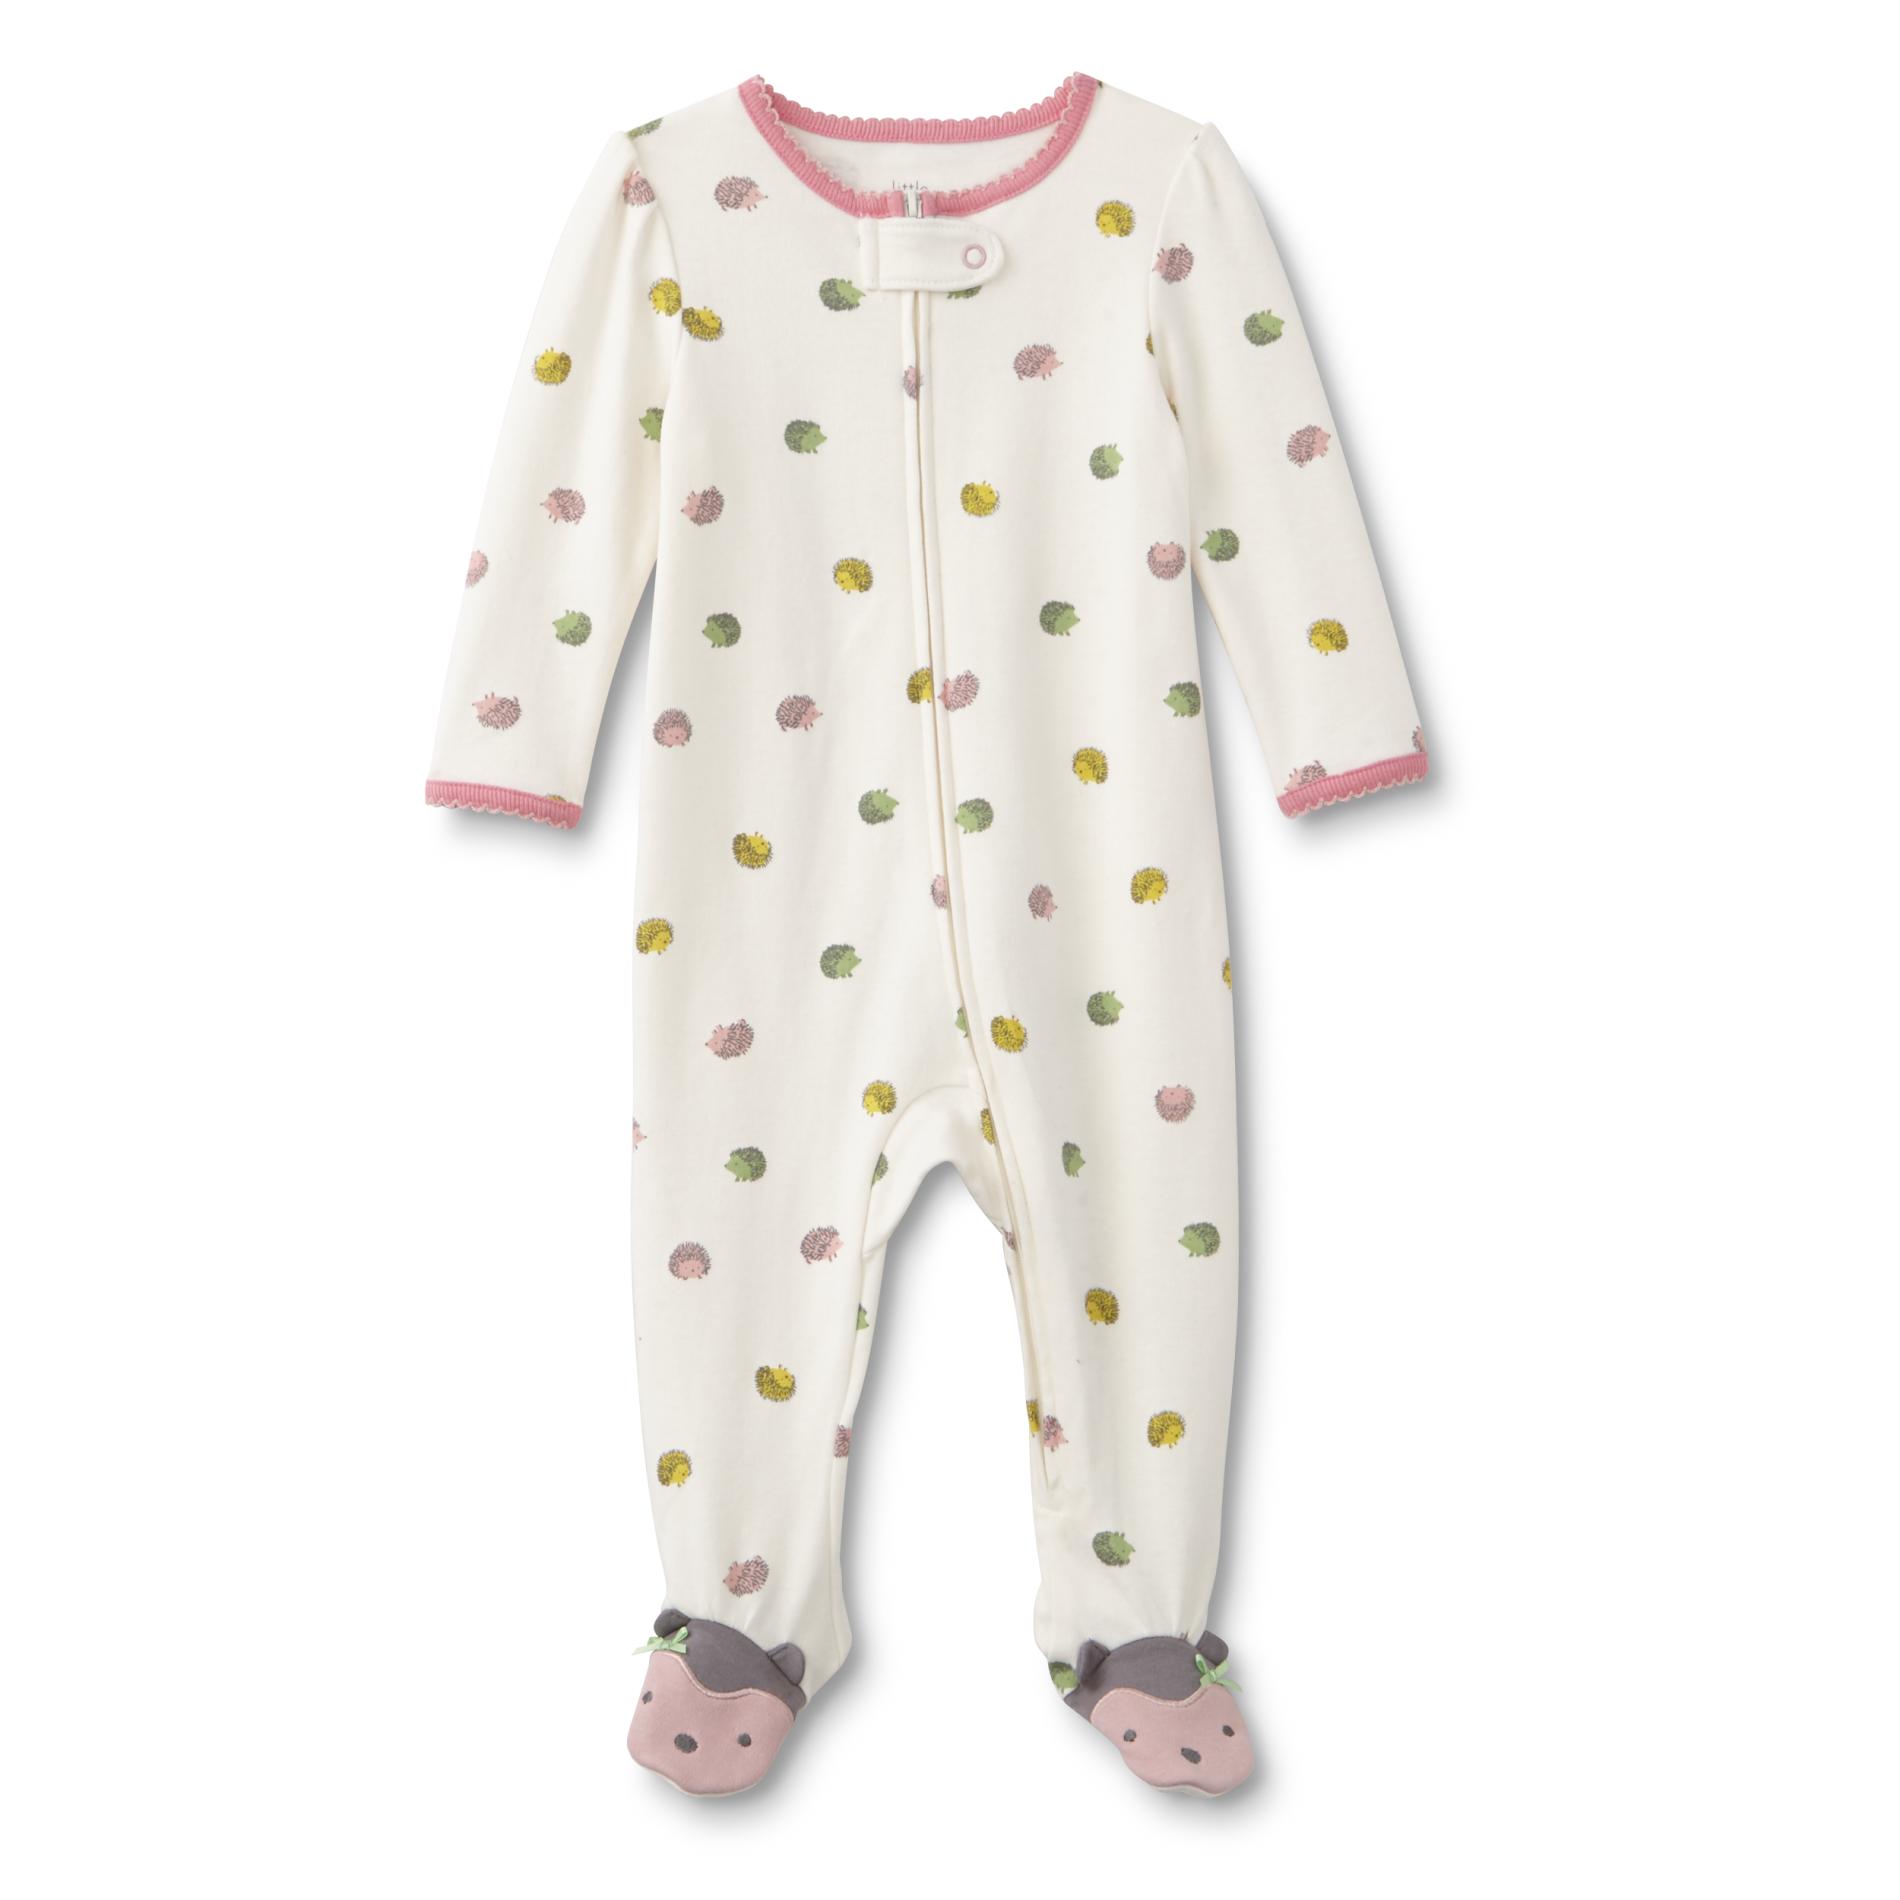 Little Wonders Newborn Girl's Sleeper Pajamas - Hedgehog